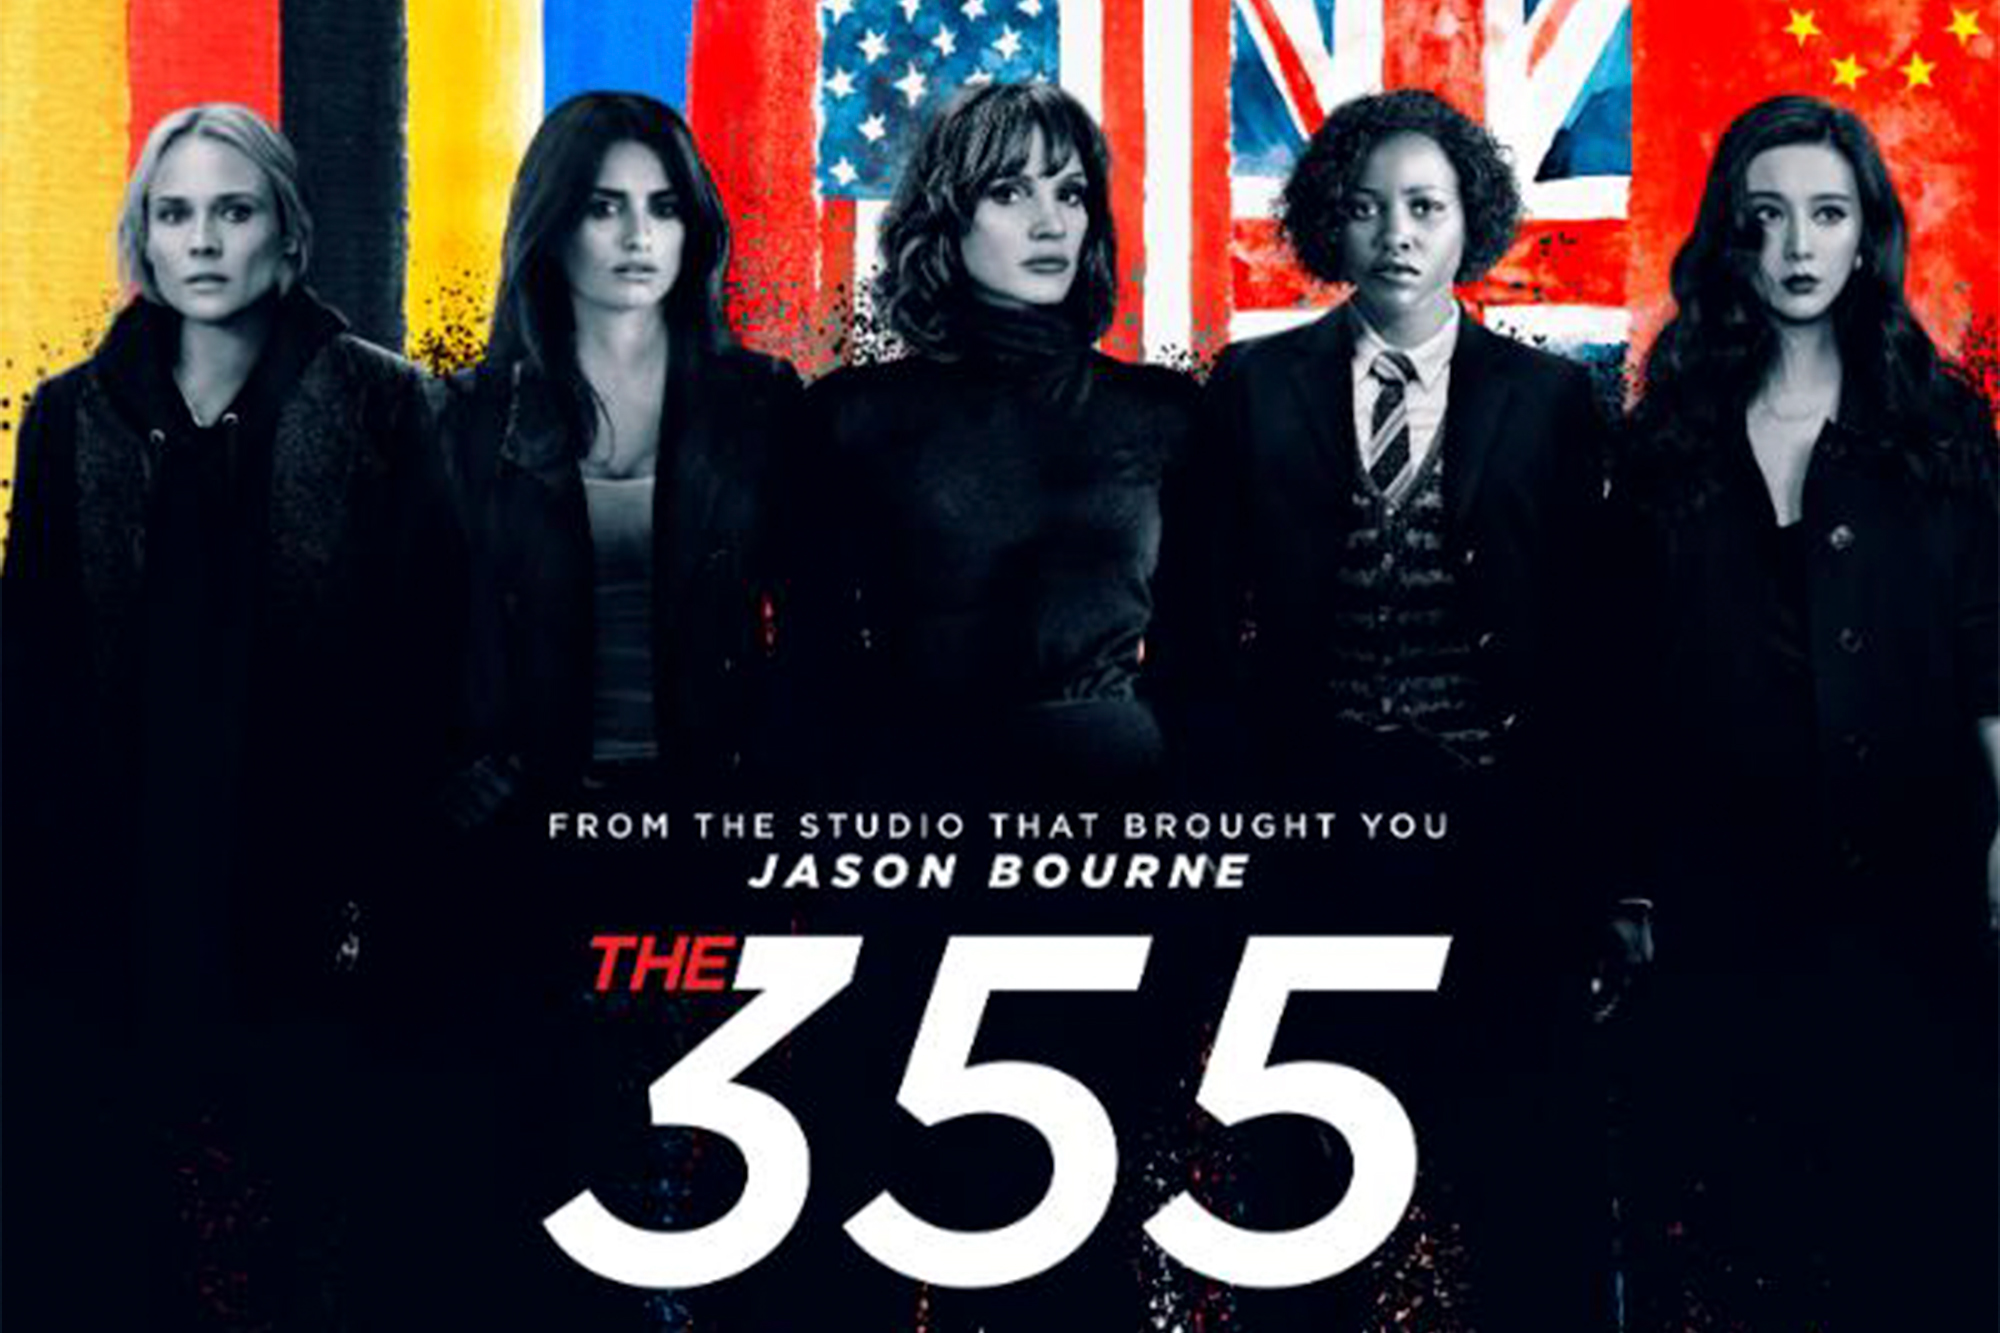 Star Studded Trailer For Universal’s Spy Film ‘The 355’